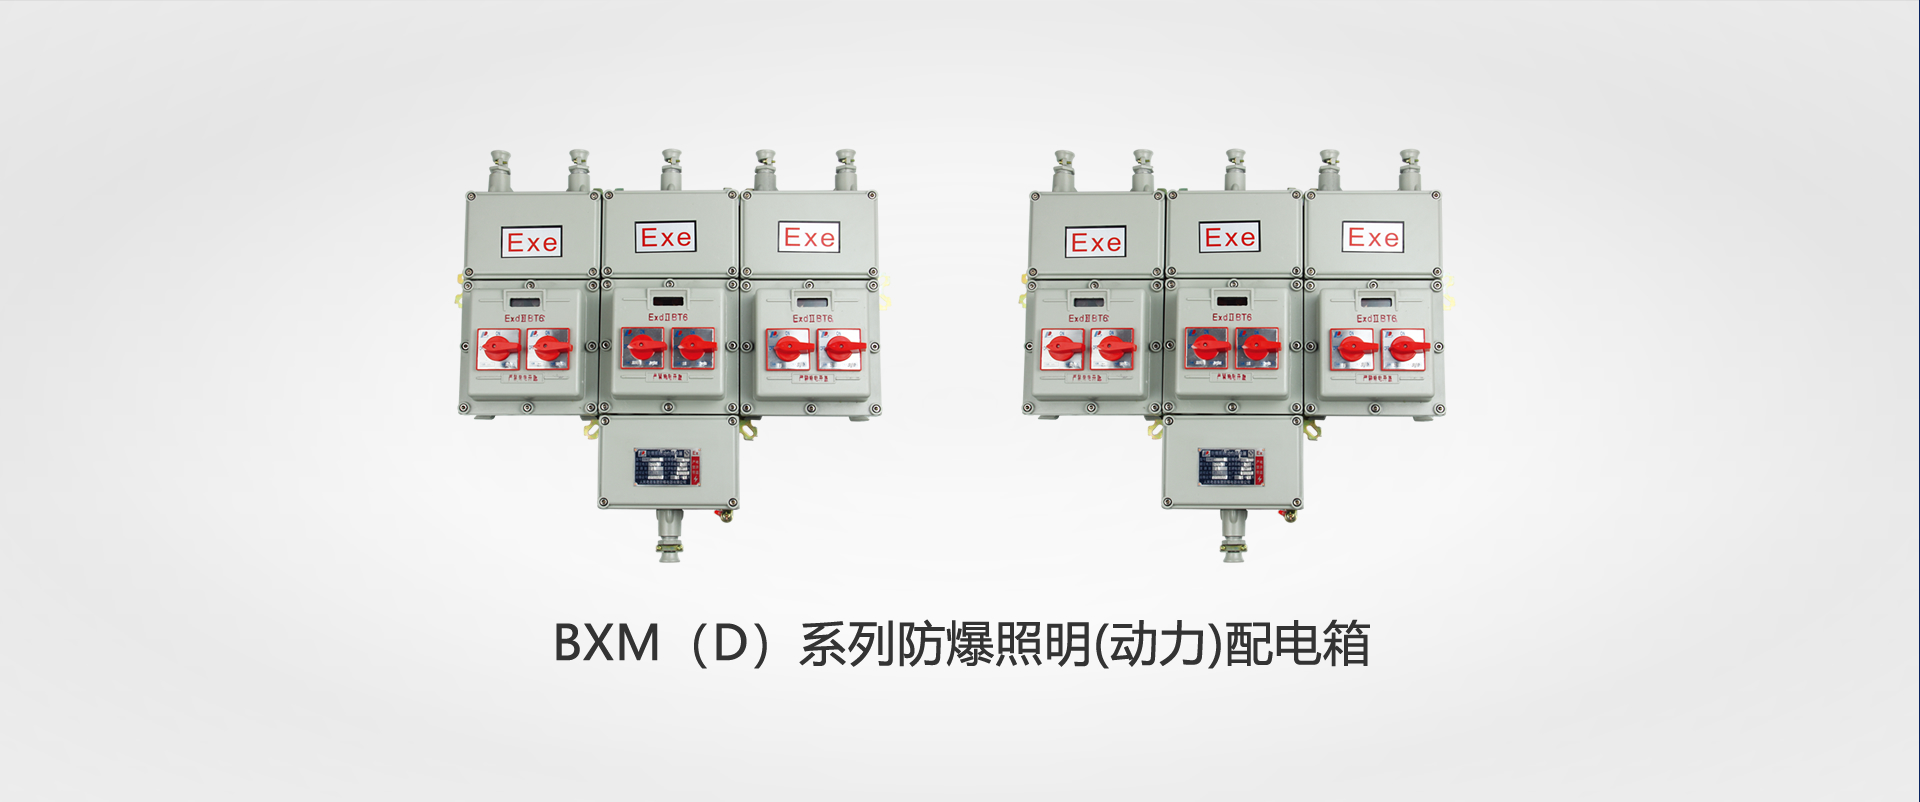 BXM（D）系列防(fang)爆照明(動力)配電箱